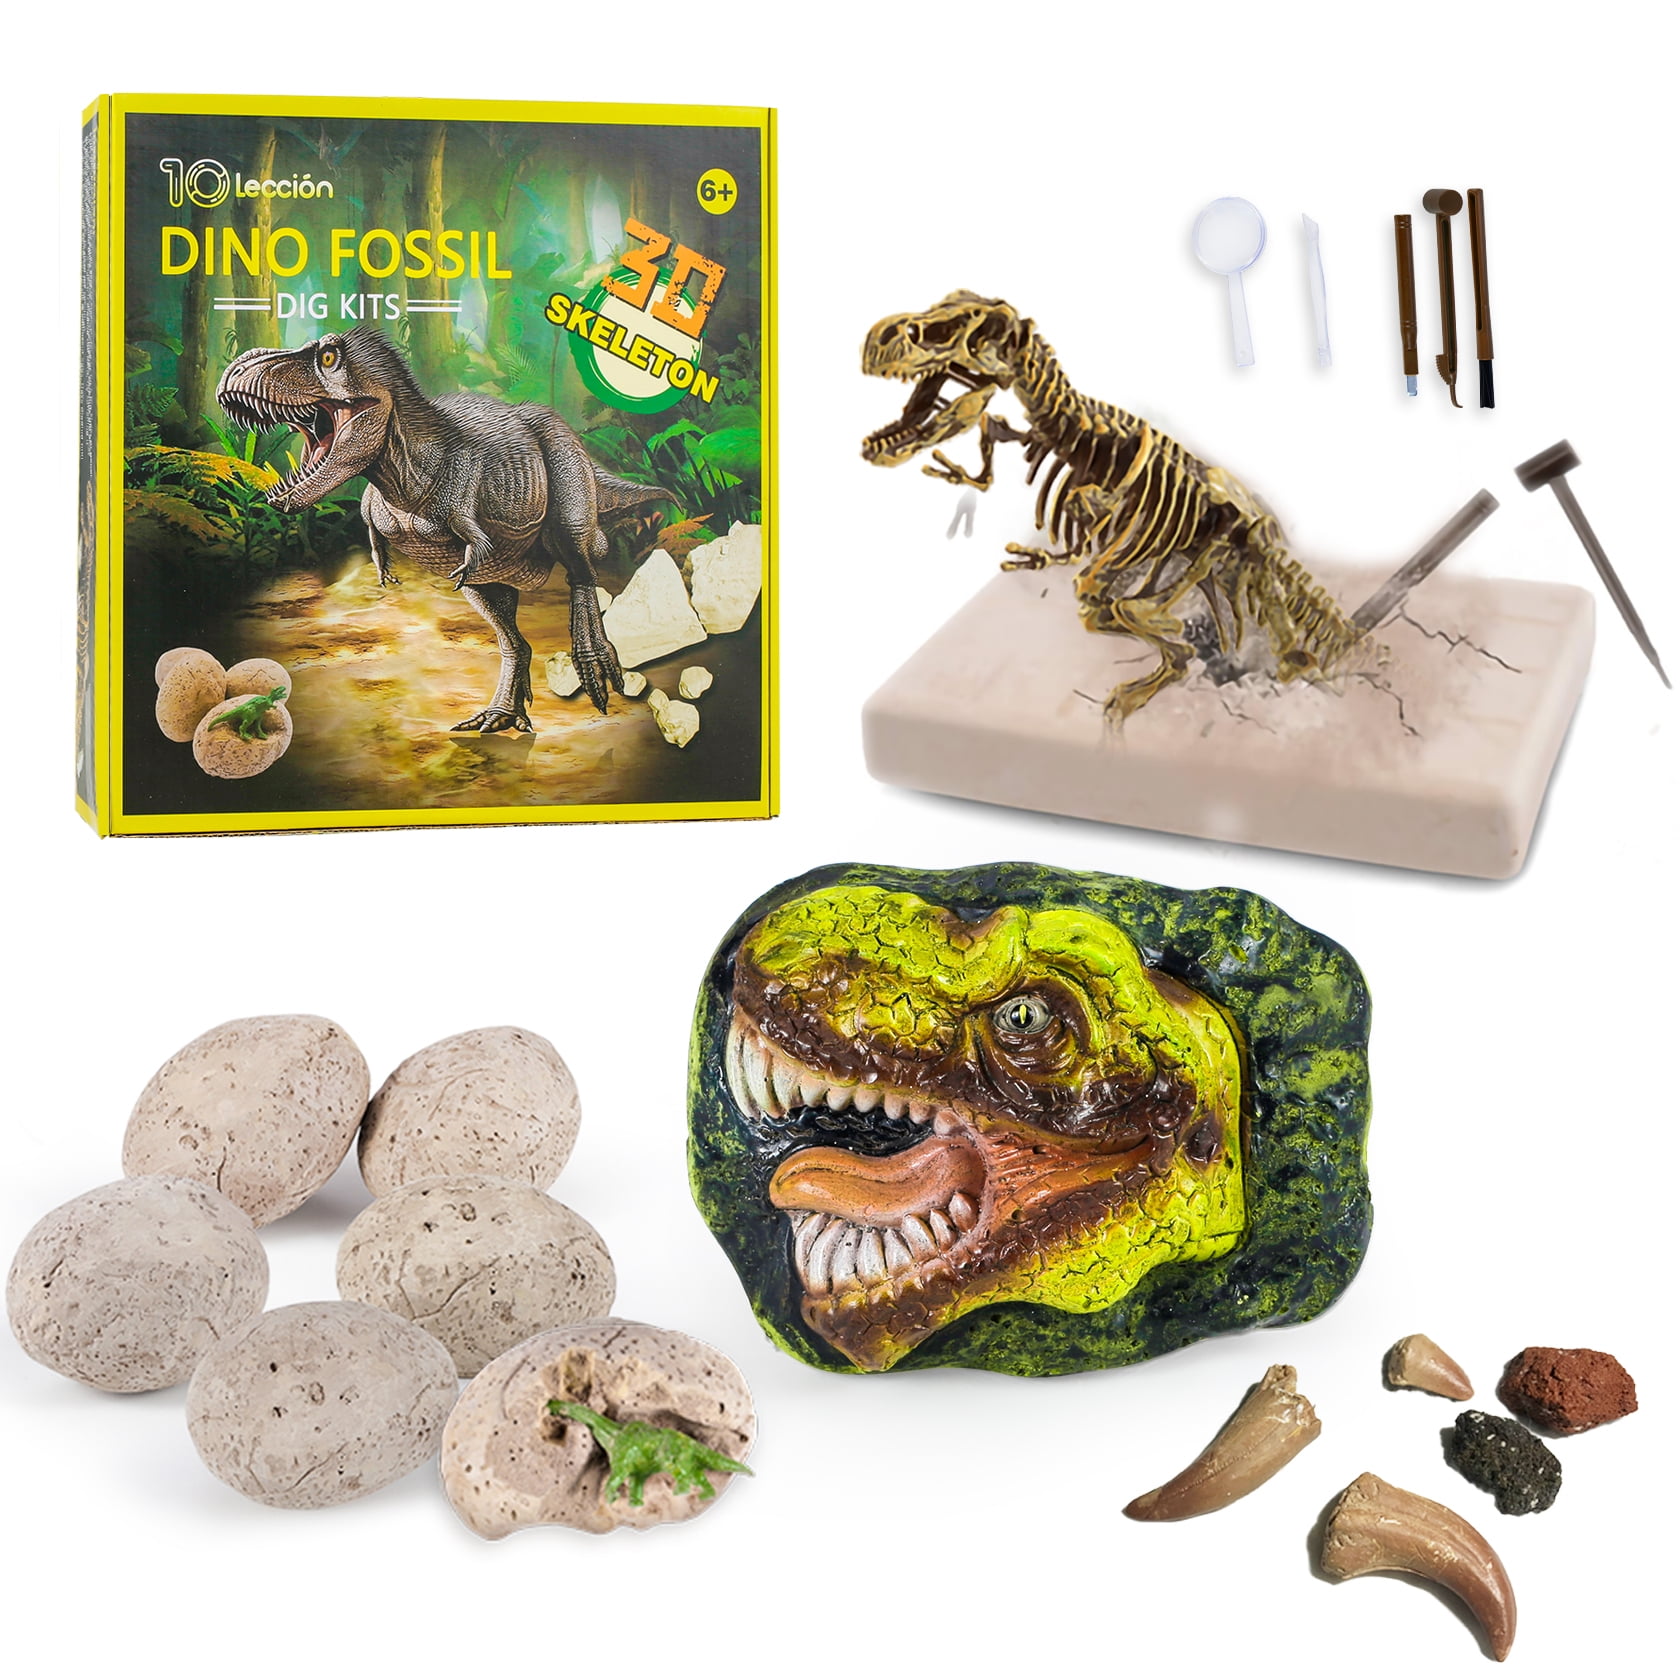 Dig Your Own Dinosaur Fossils Excavation Kit Kids Gift Jurassic Skeleton 4 Dinos 